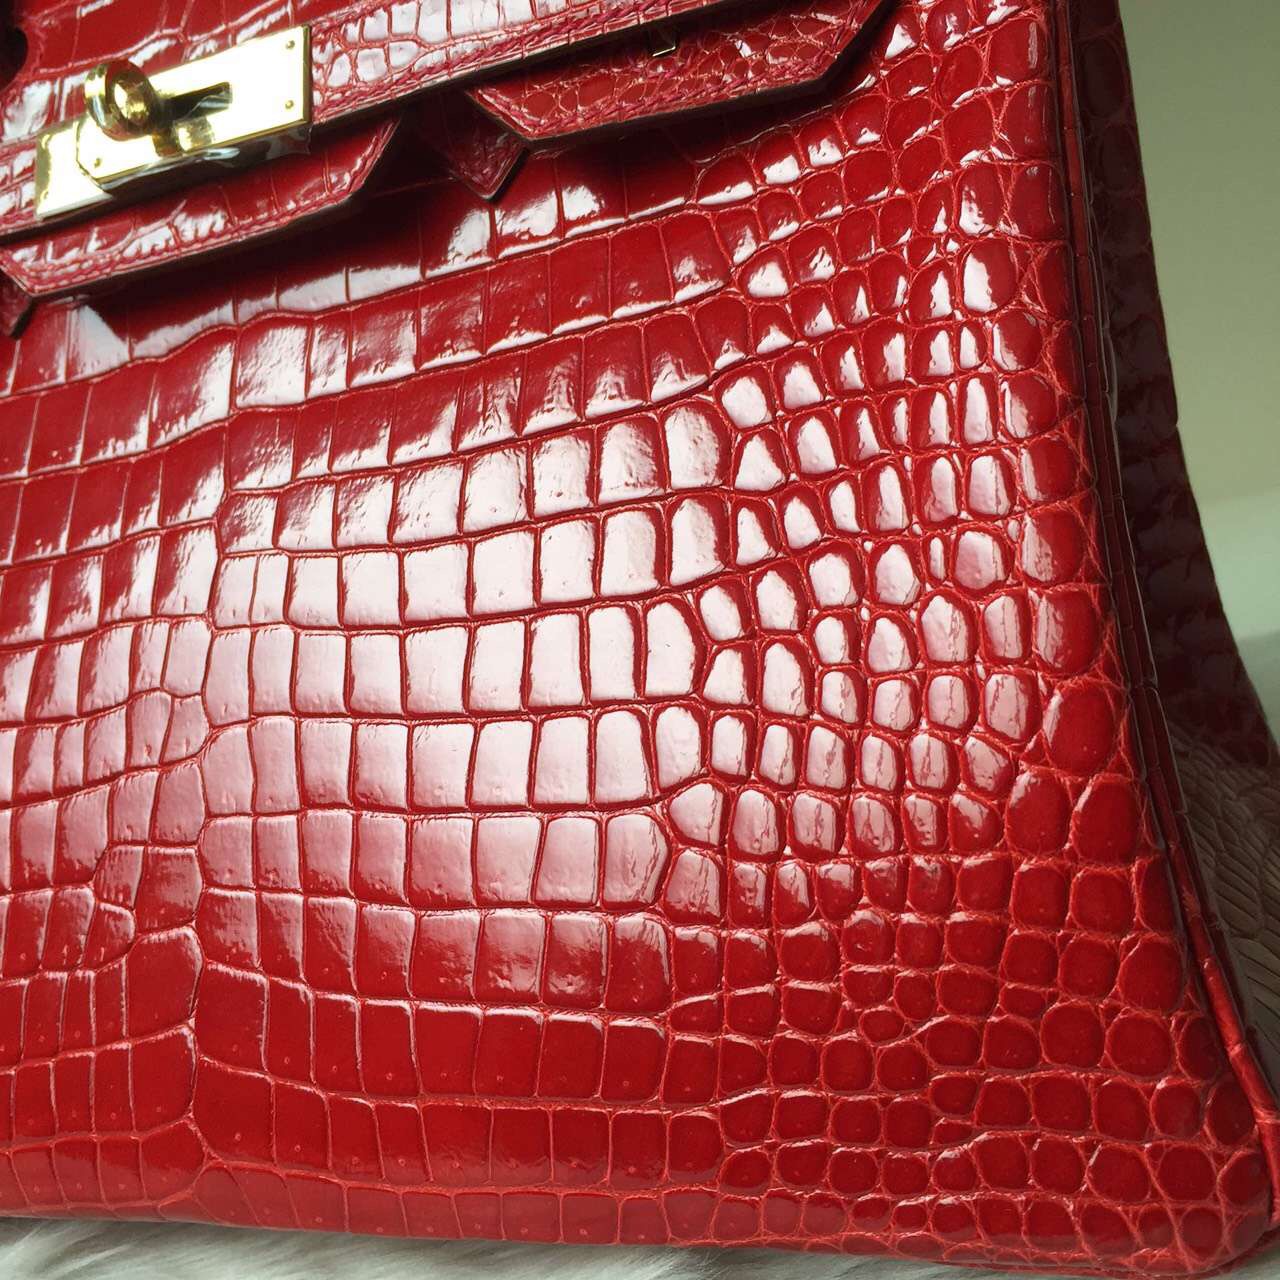 Discount Hermes Bag CK95 Ferrari Red Crocodile Shiny Leather Birkin 30cm